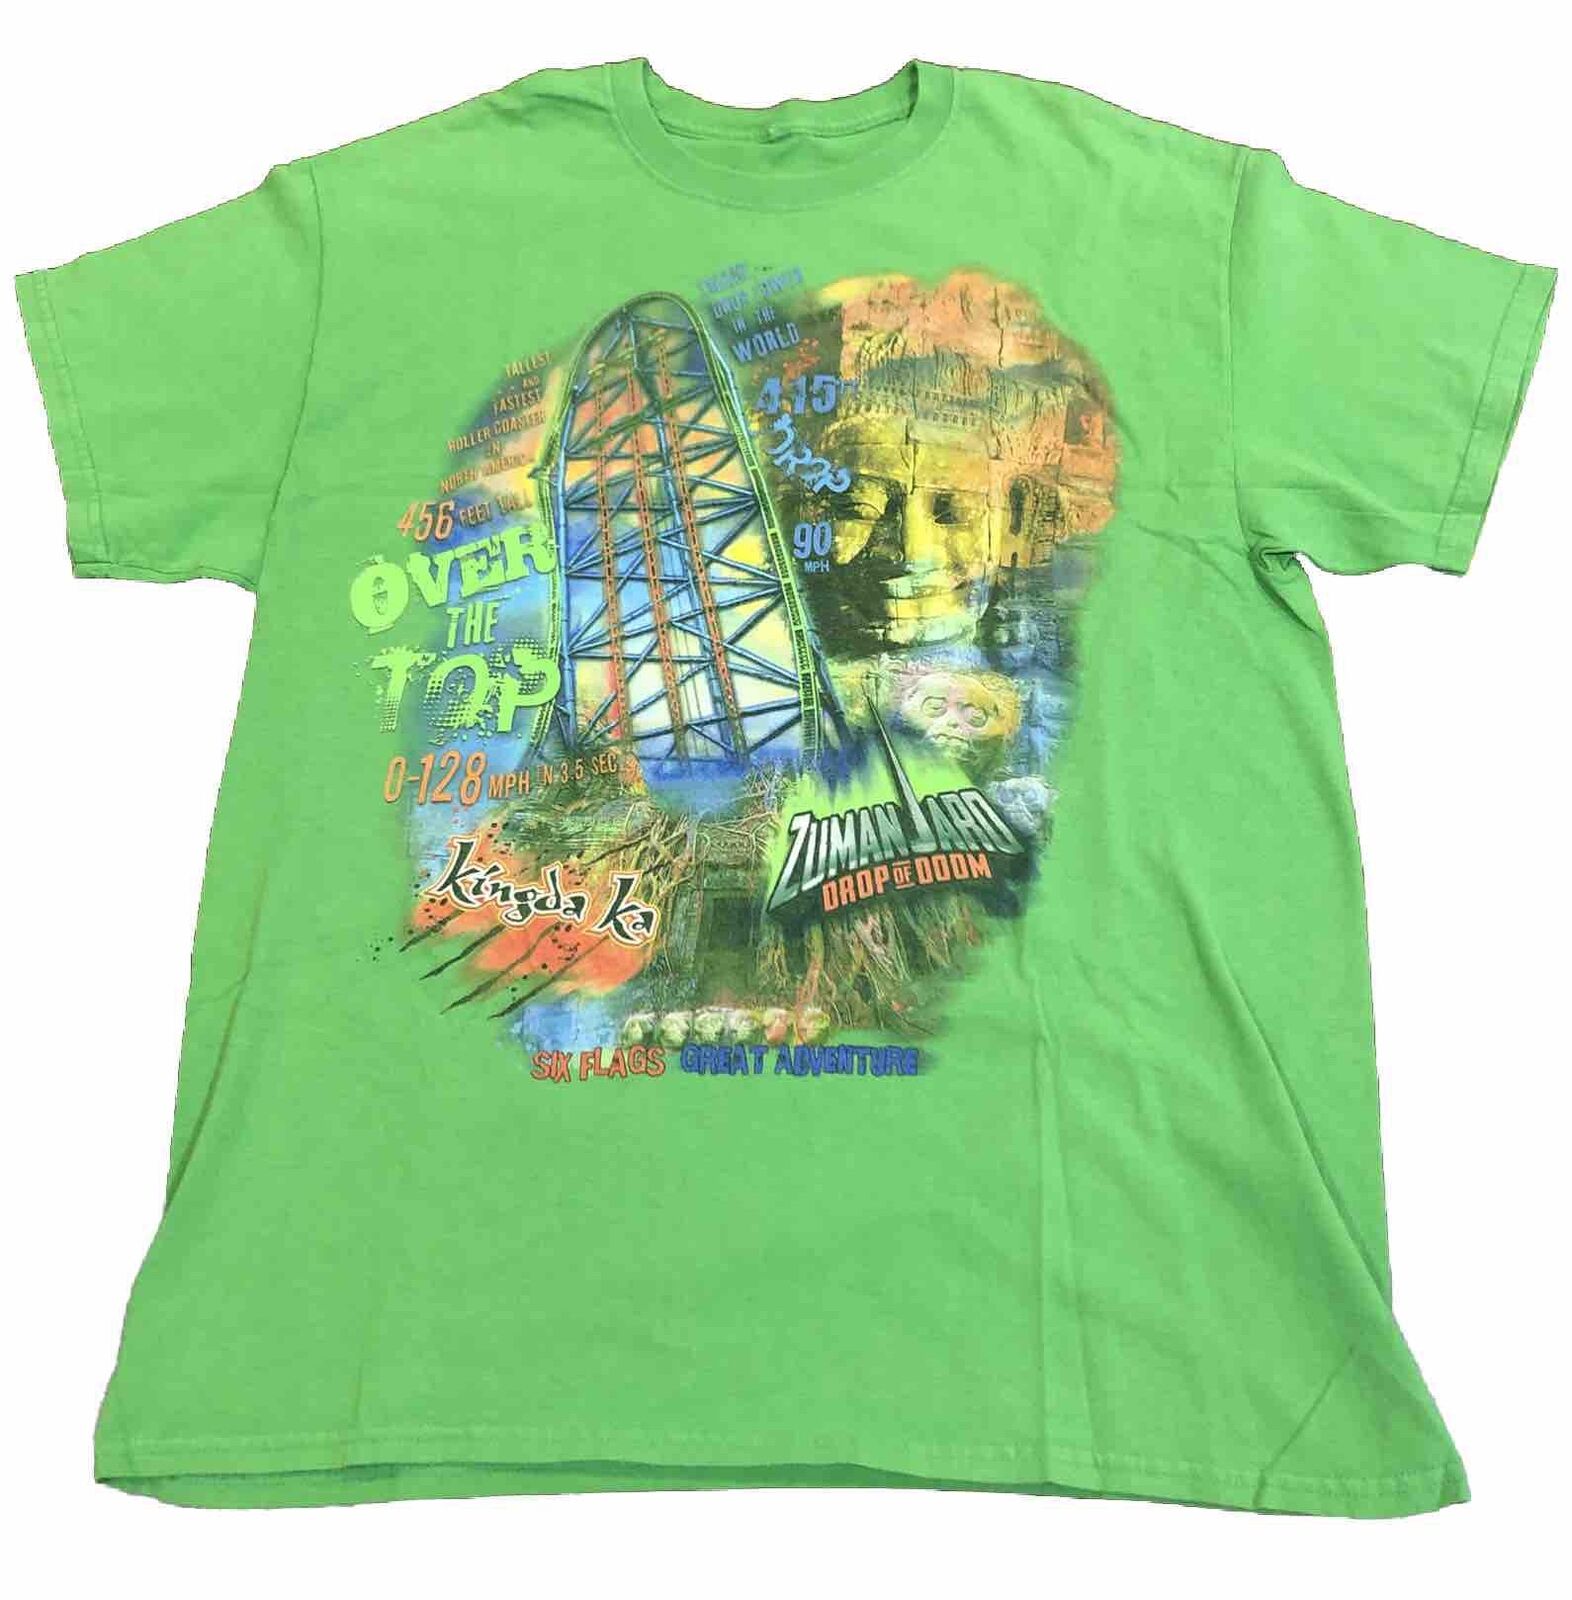 Six Flags Roller Coaster Kingda Ka Vs Zumanjaro Drop of Doom T-shirt Size L